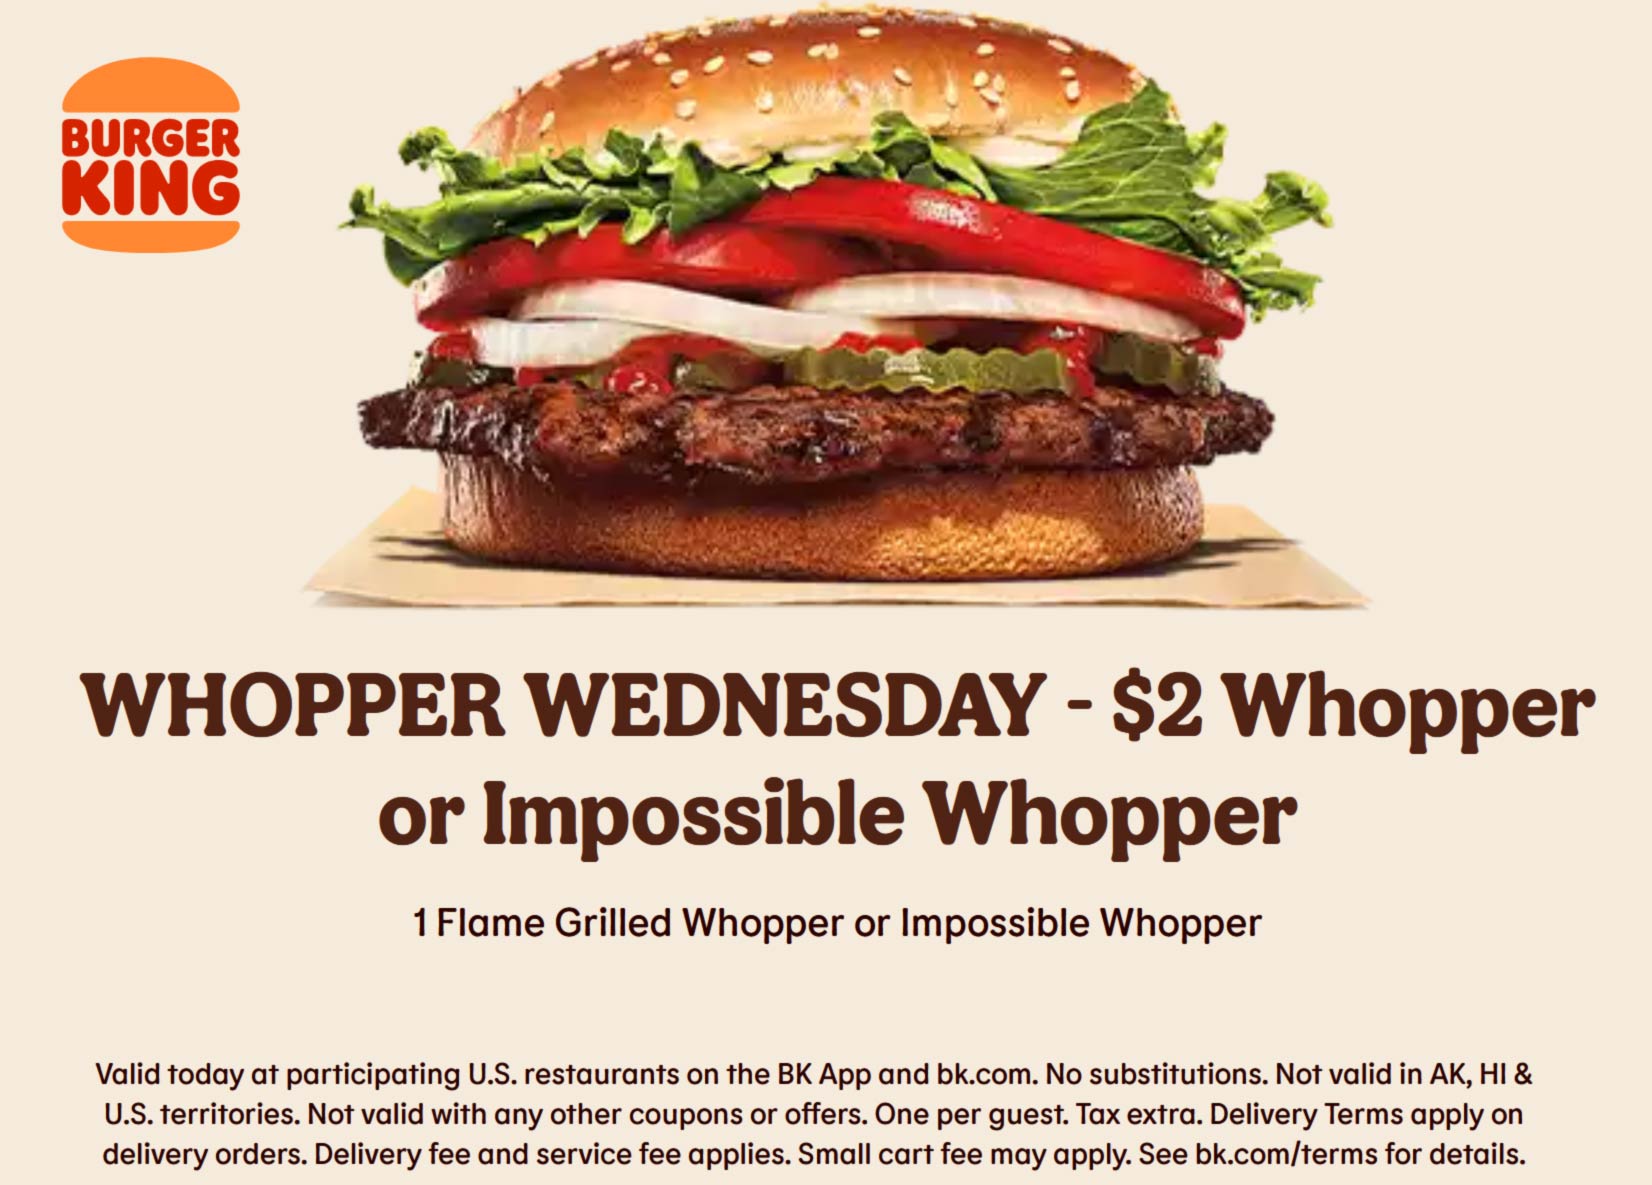 Burger King restaurants Coupon  $2 whopper cheeseburger today online at Burger King #burgerking 